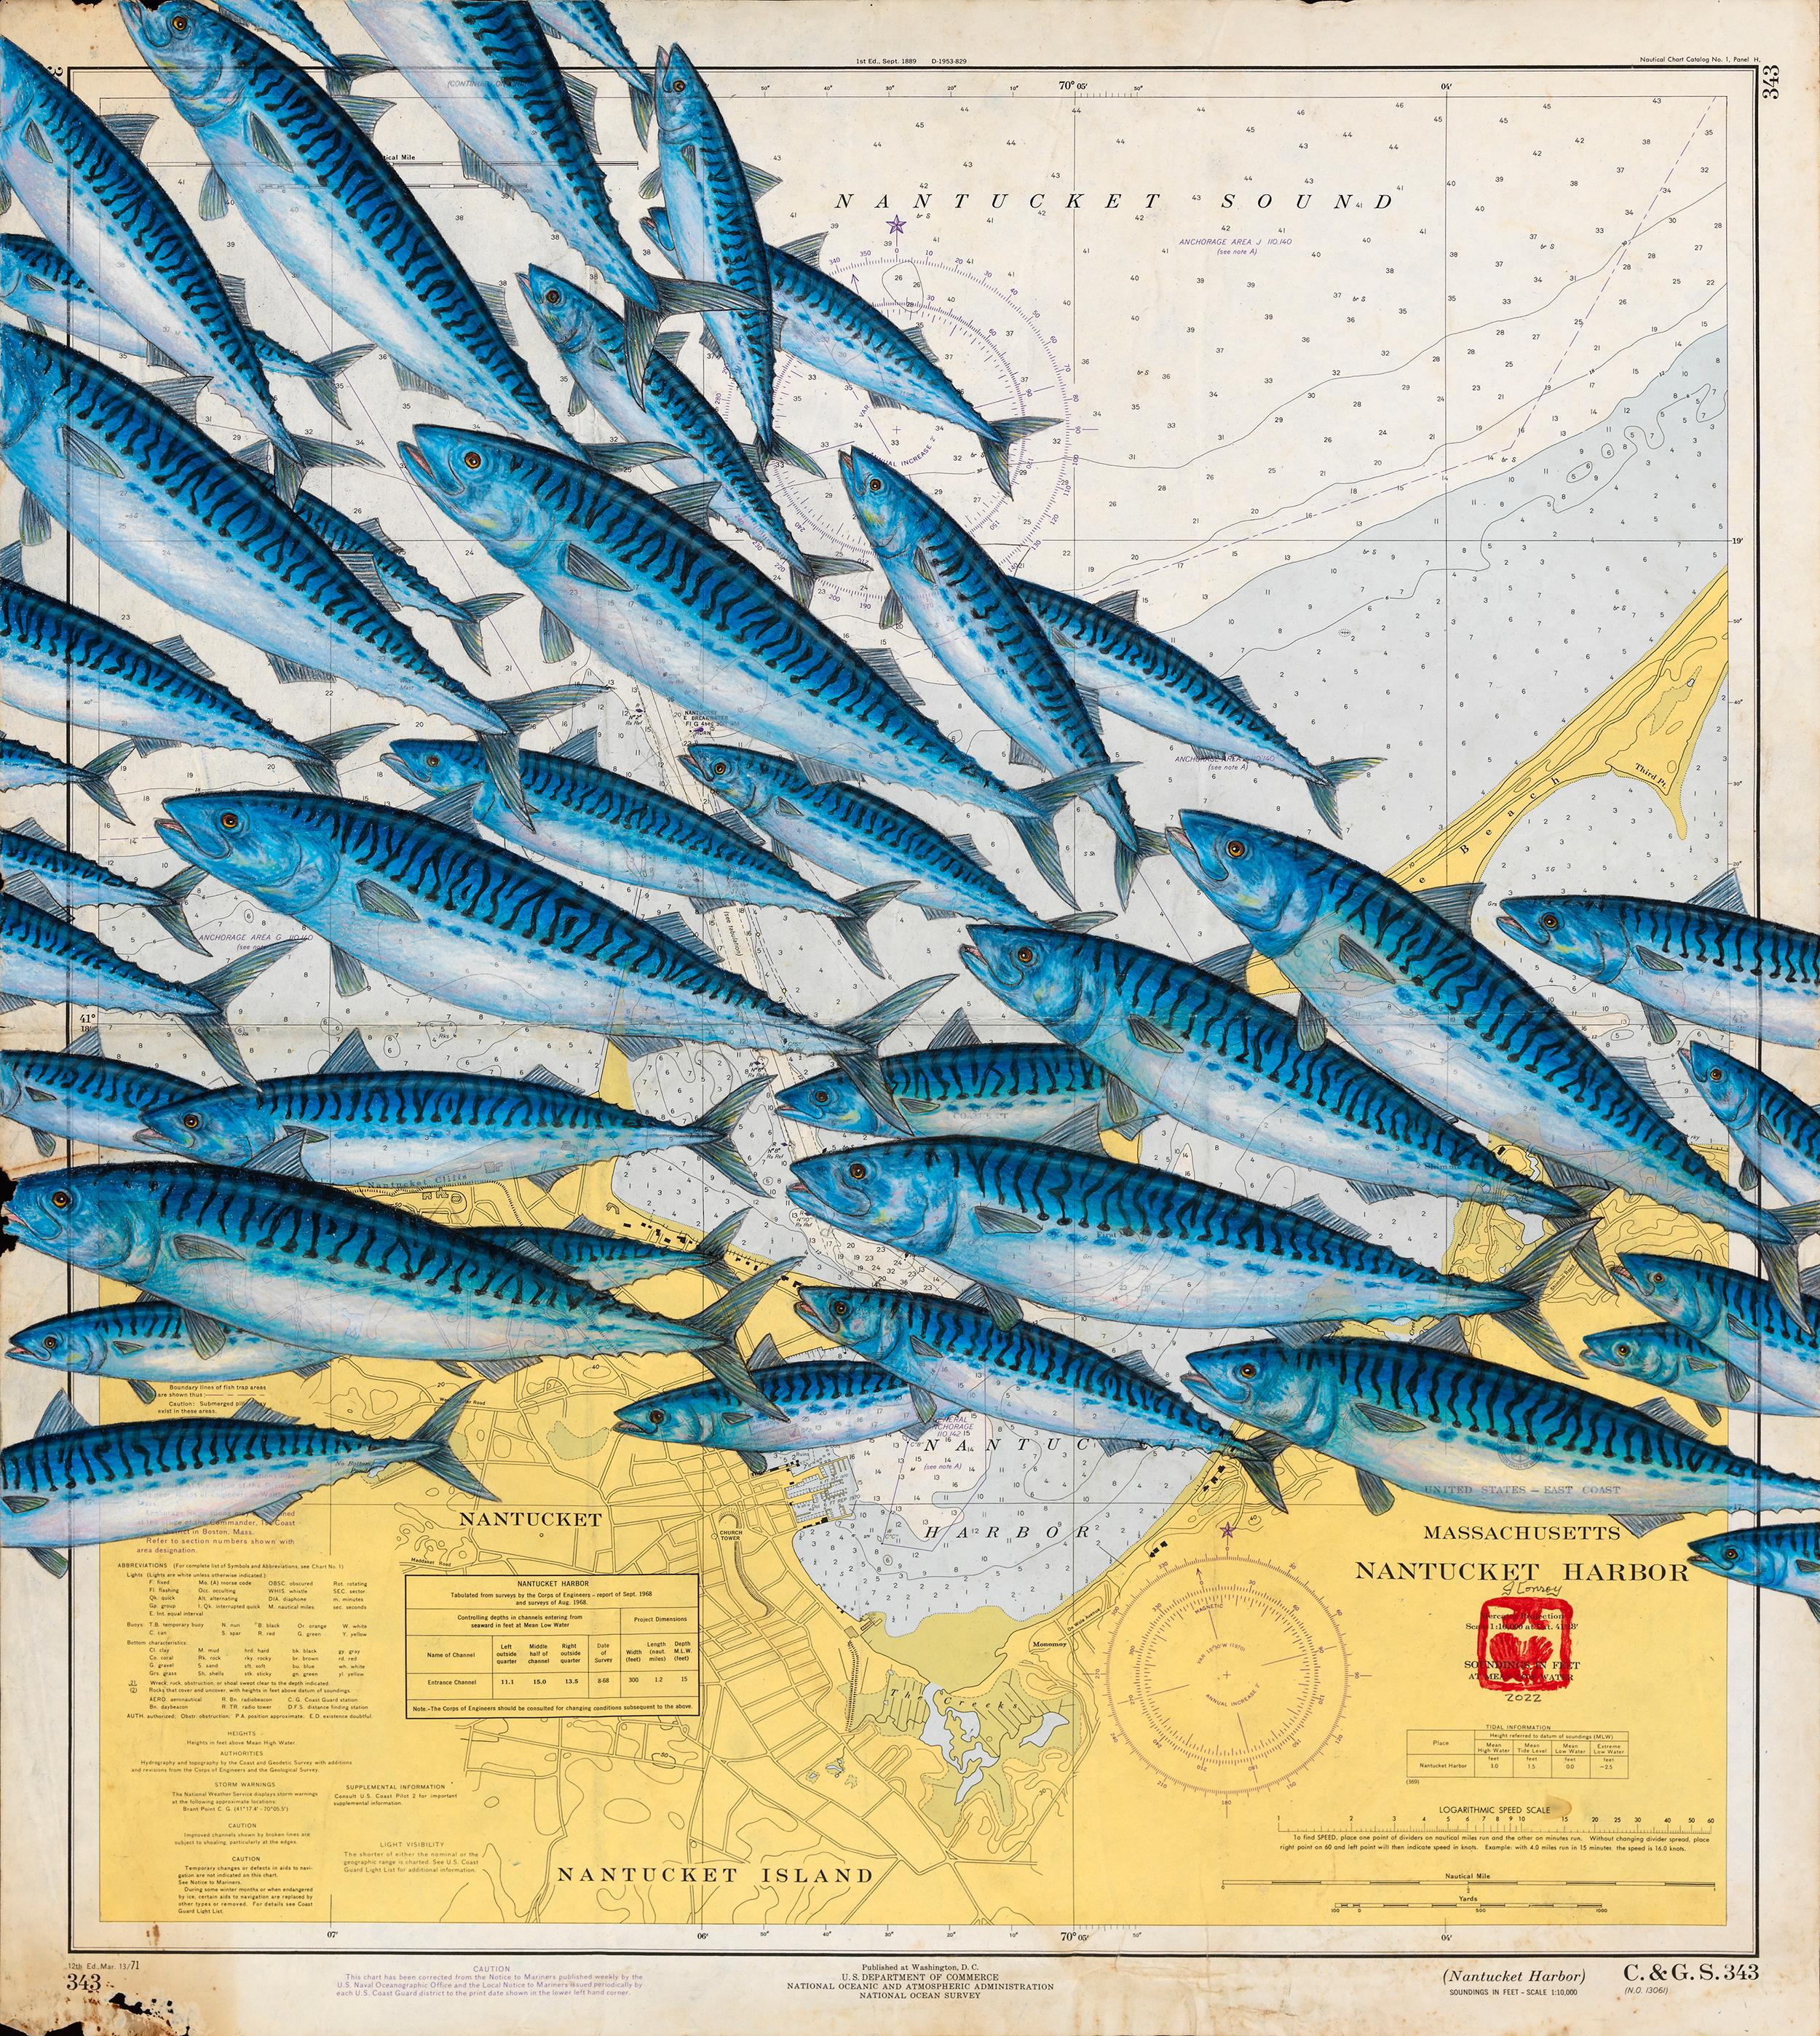 Jeff Conroy Animal Painting - Nantucket Mack Pack - A Gathering of Mackerel on a Vintage Nautical Map